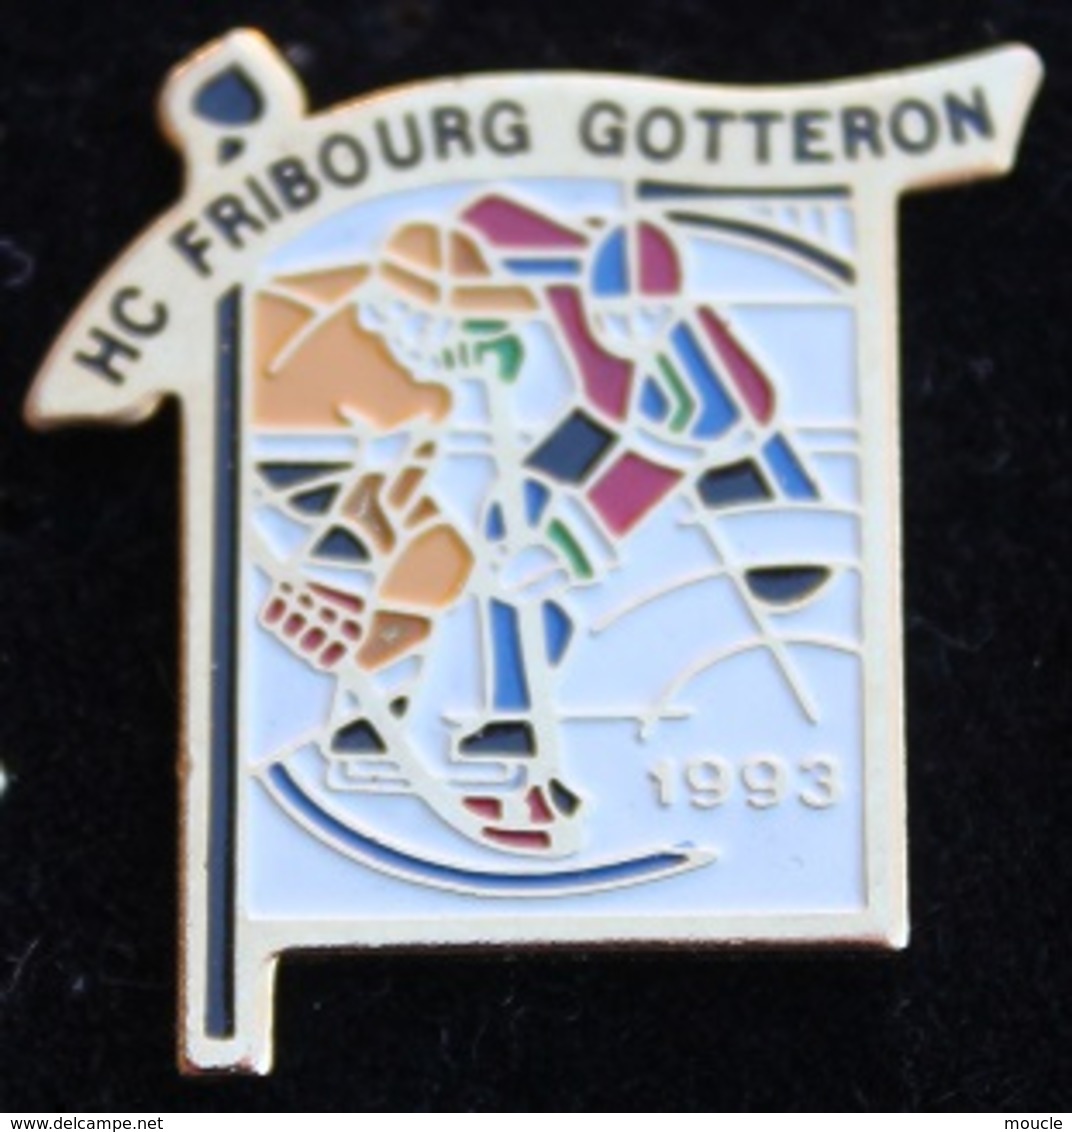 HOCKEY CLUB FRIBOUG GOTTERON - 1993 - JOUEURS -  HOCKEY SUR GLACE SUISSE - ICE - SCHWEIZ - SWITZERLAND -    (19) - Sports D'hiver